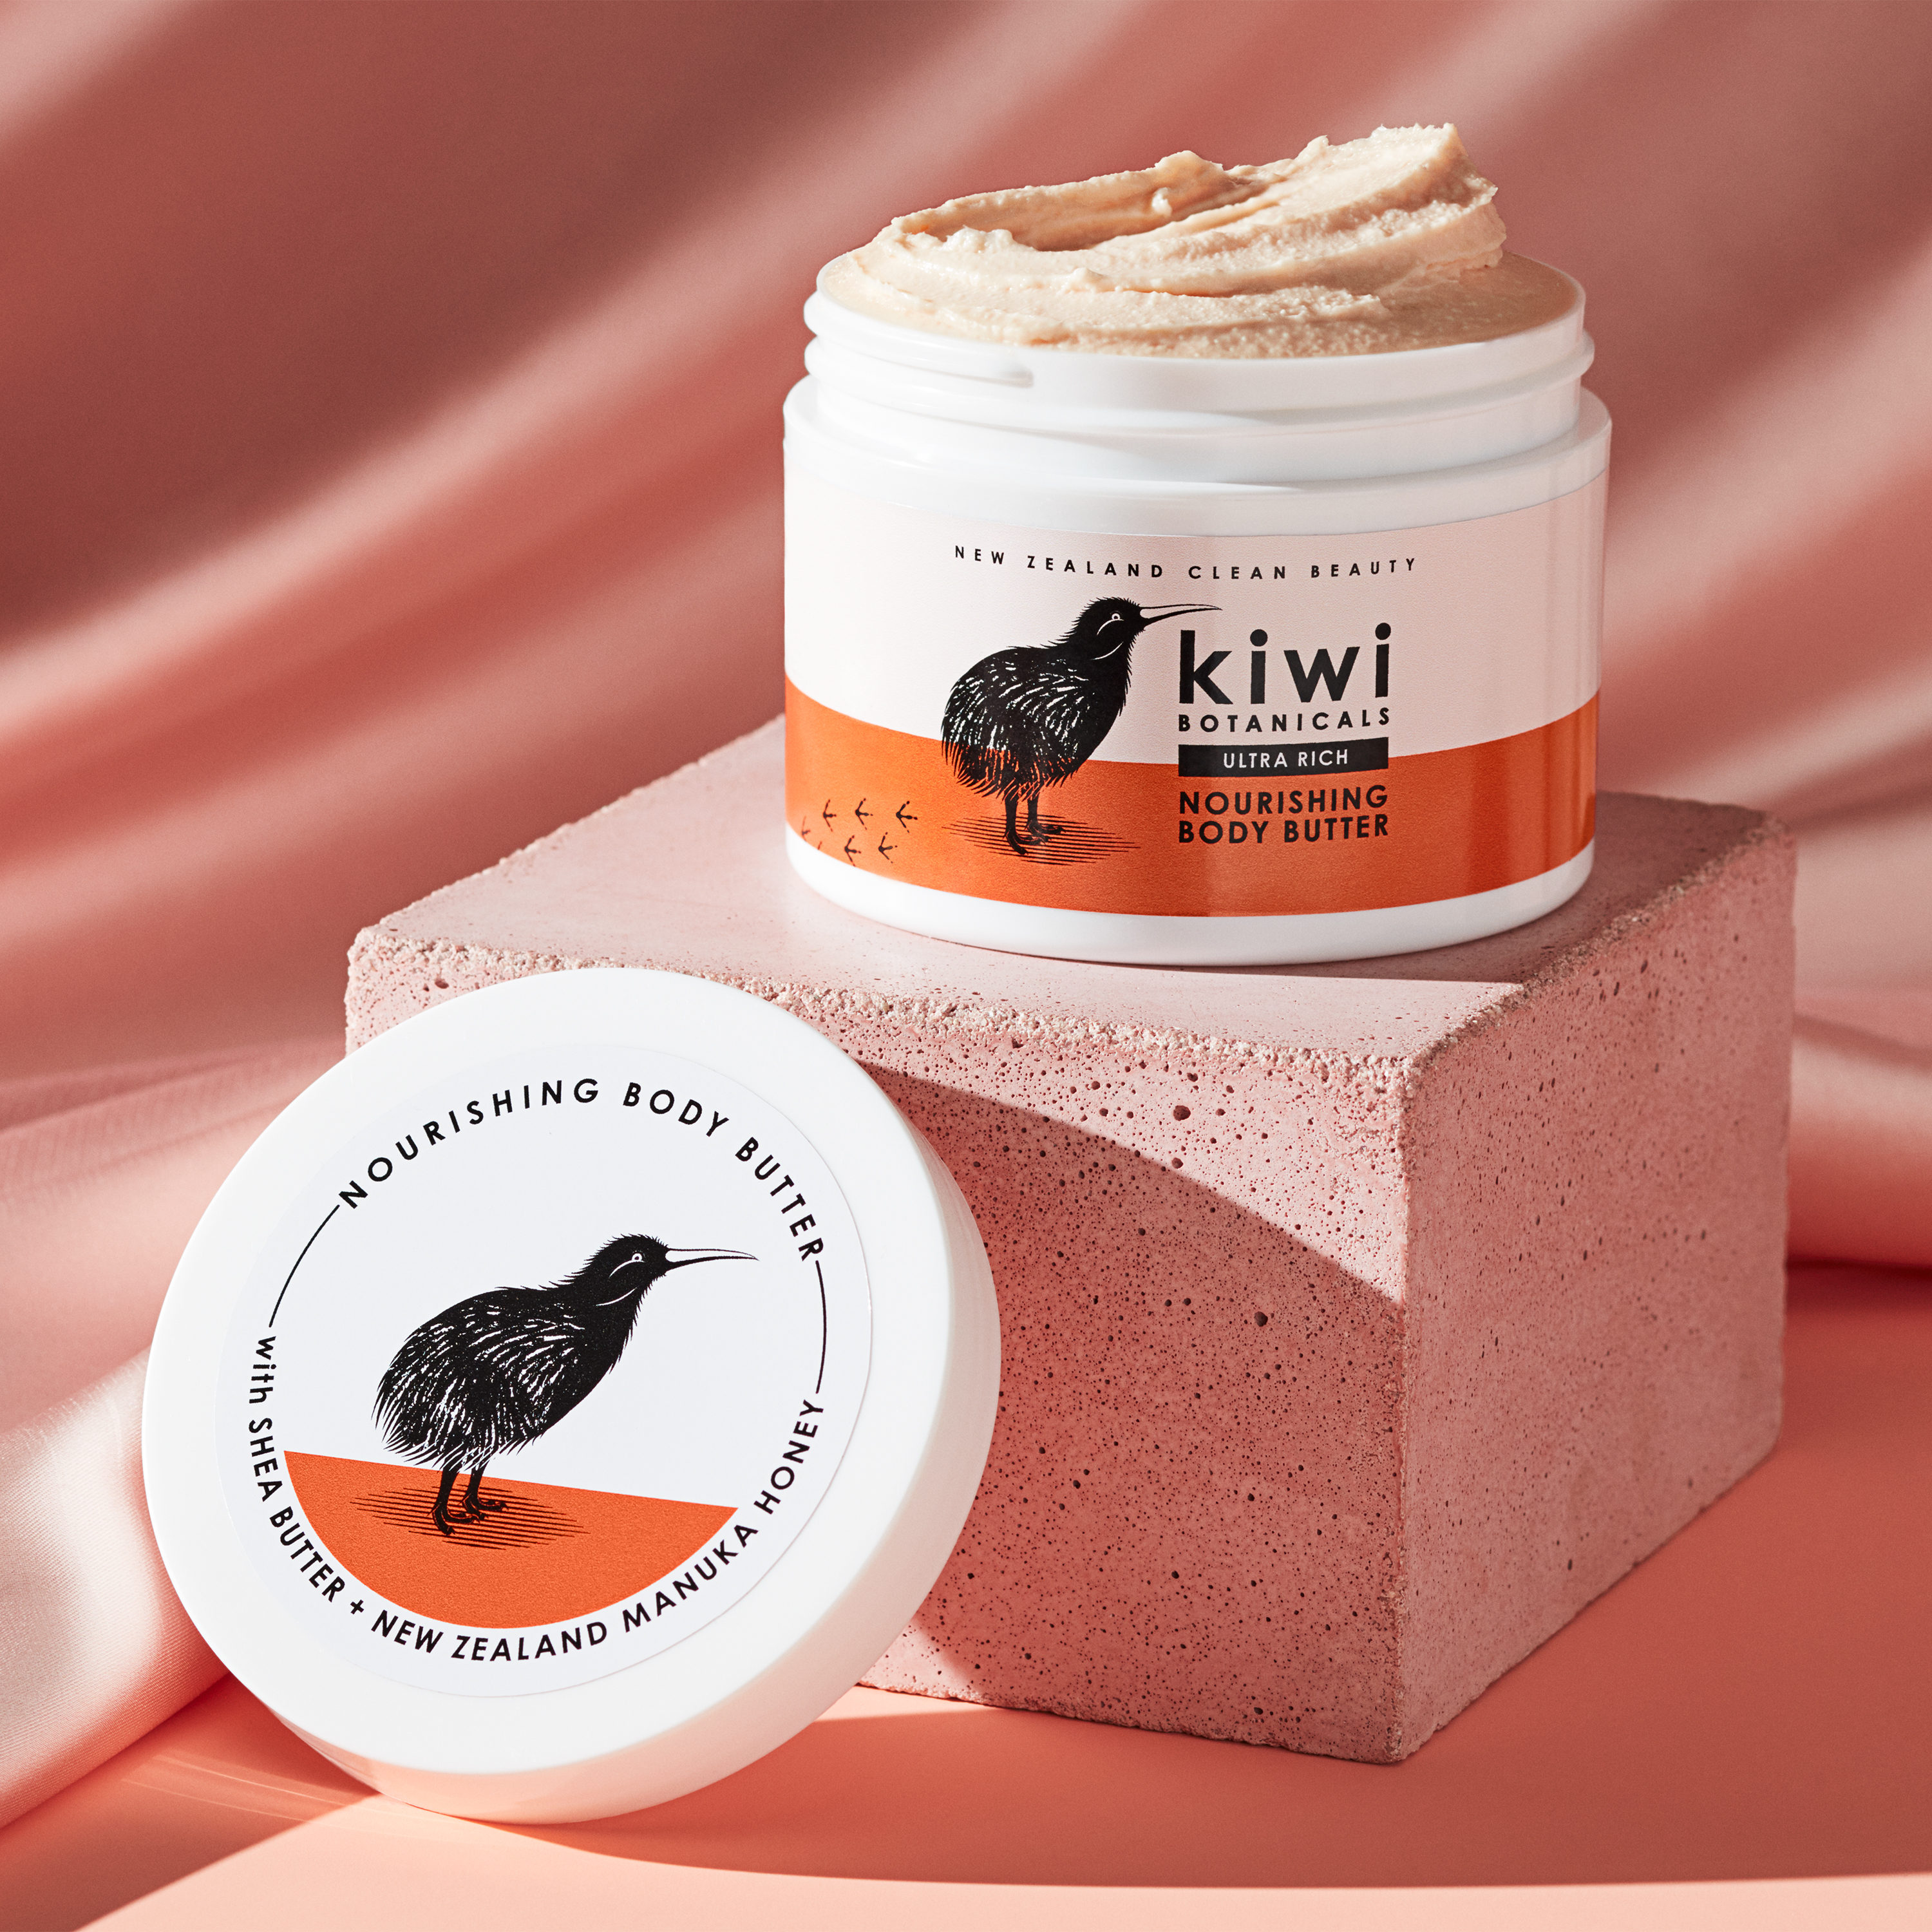 Kiwi Botanicals Nourishing Body Butter with Manuka Honey & Shea Butter for Dry Skin, 8.5 oz - image 2 of 7